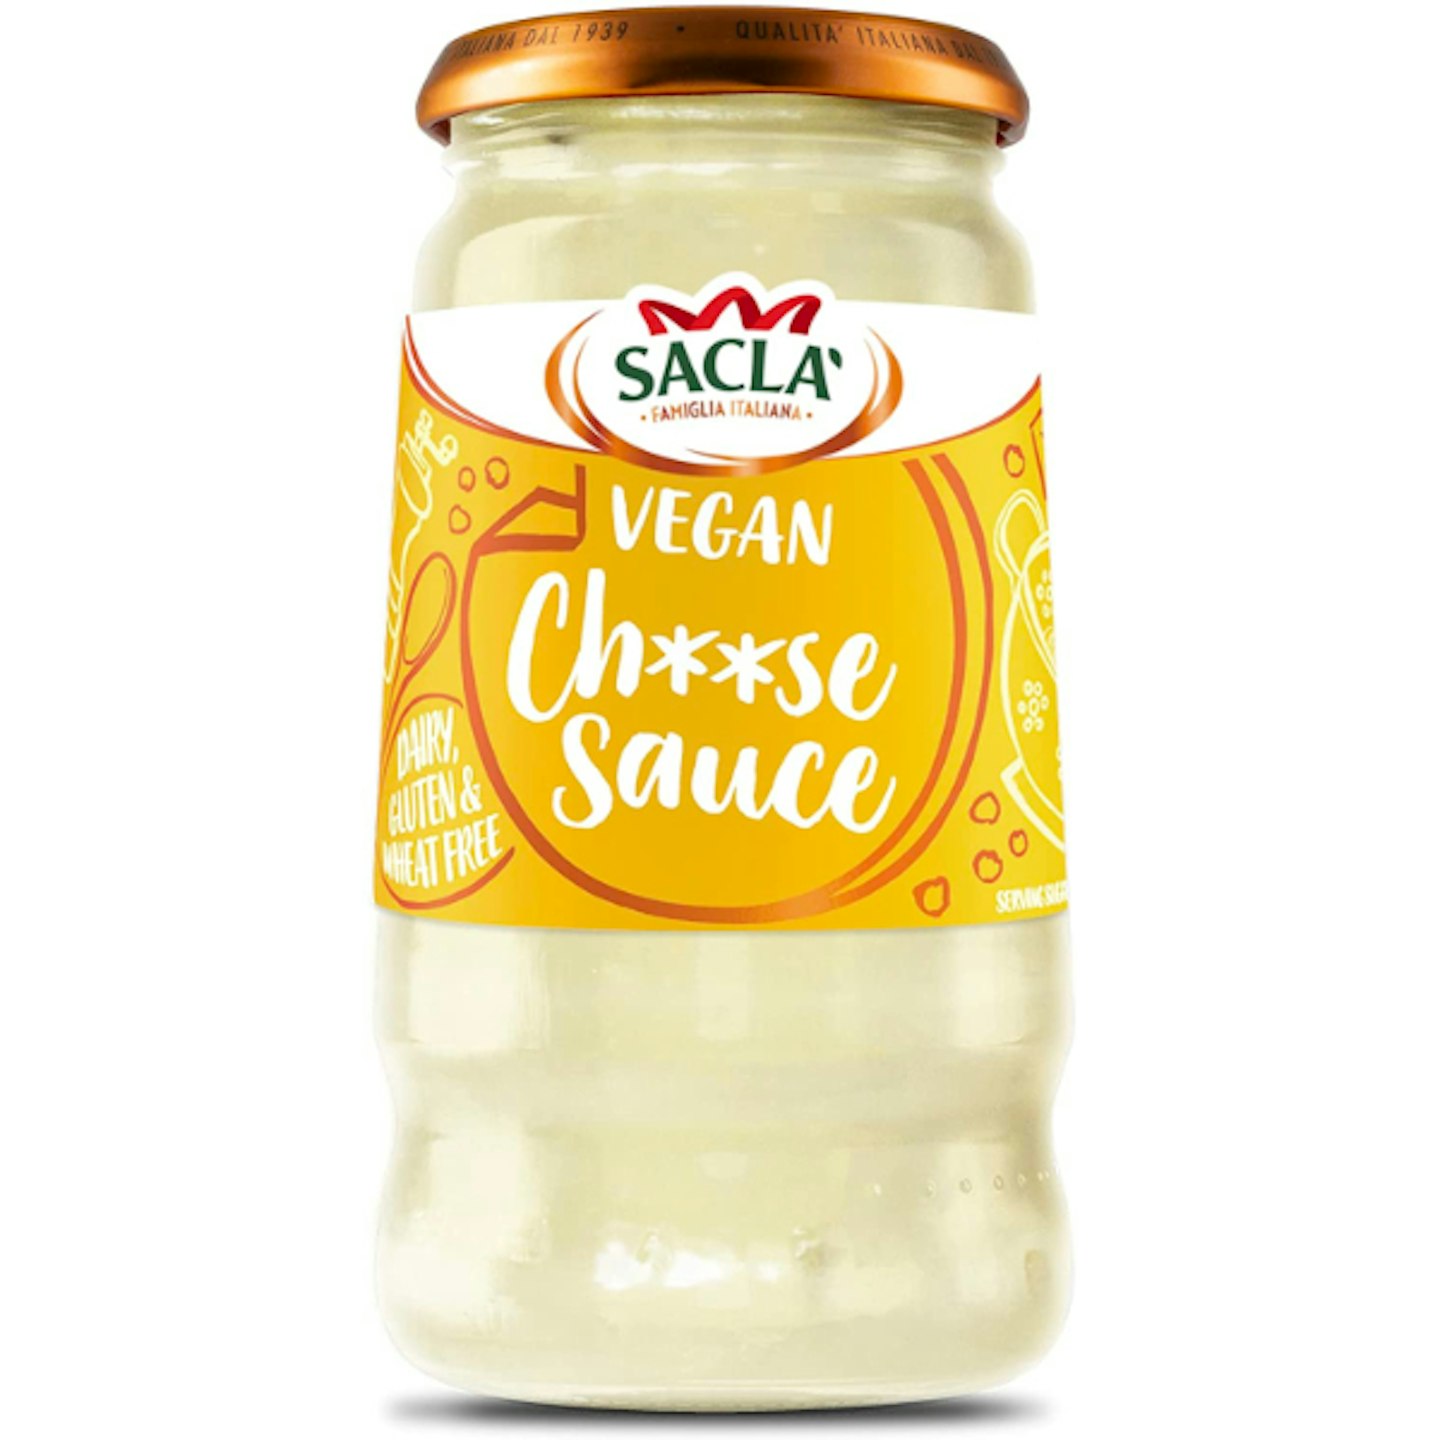 Sacla Vegan Cheese Sauce